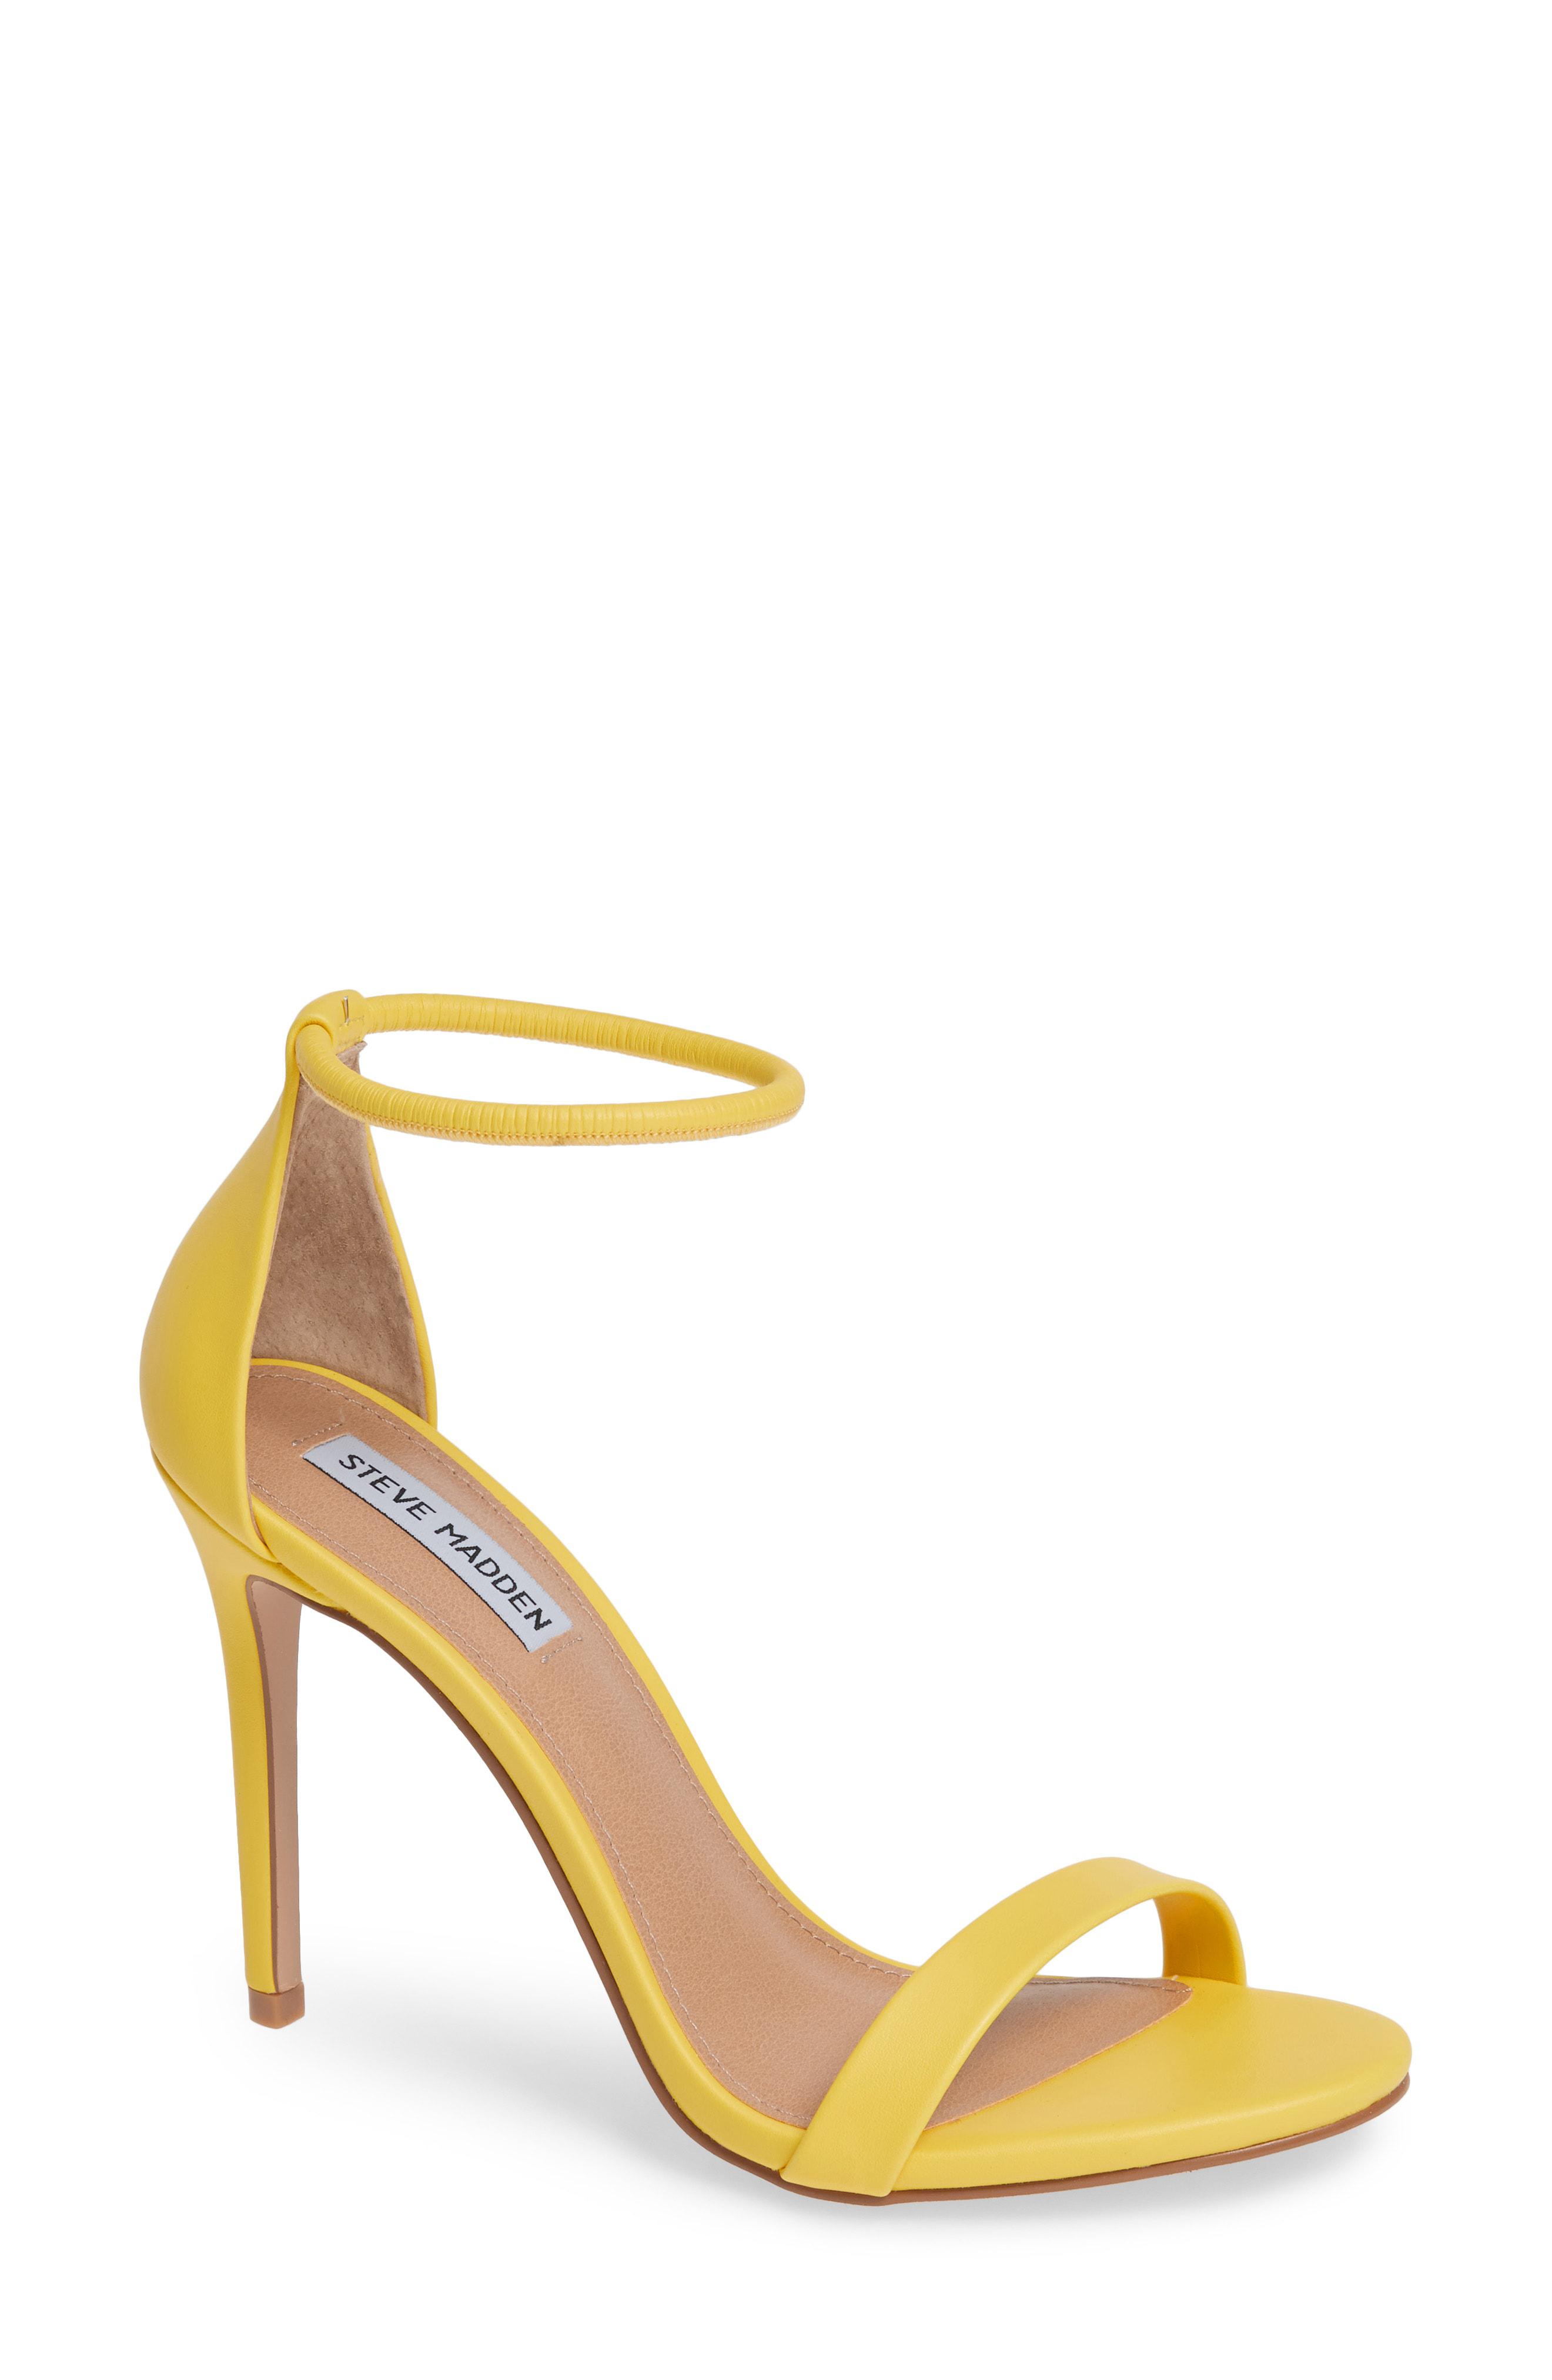 Steve Madden Yellow Heels Flash Sales - benim.k12.tr 1688043829